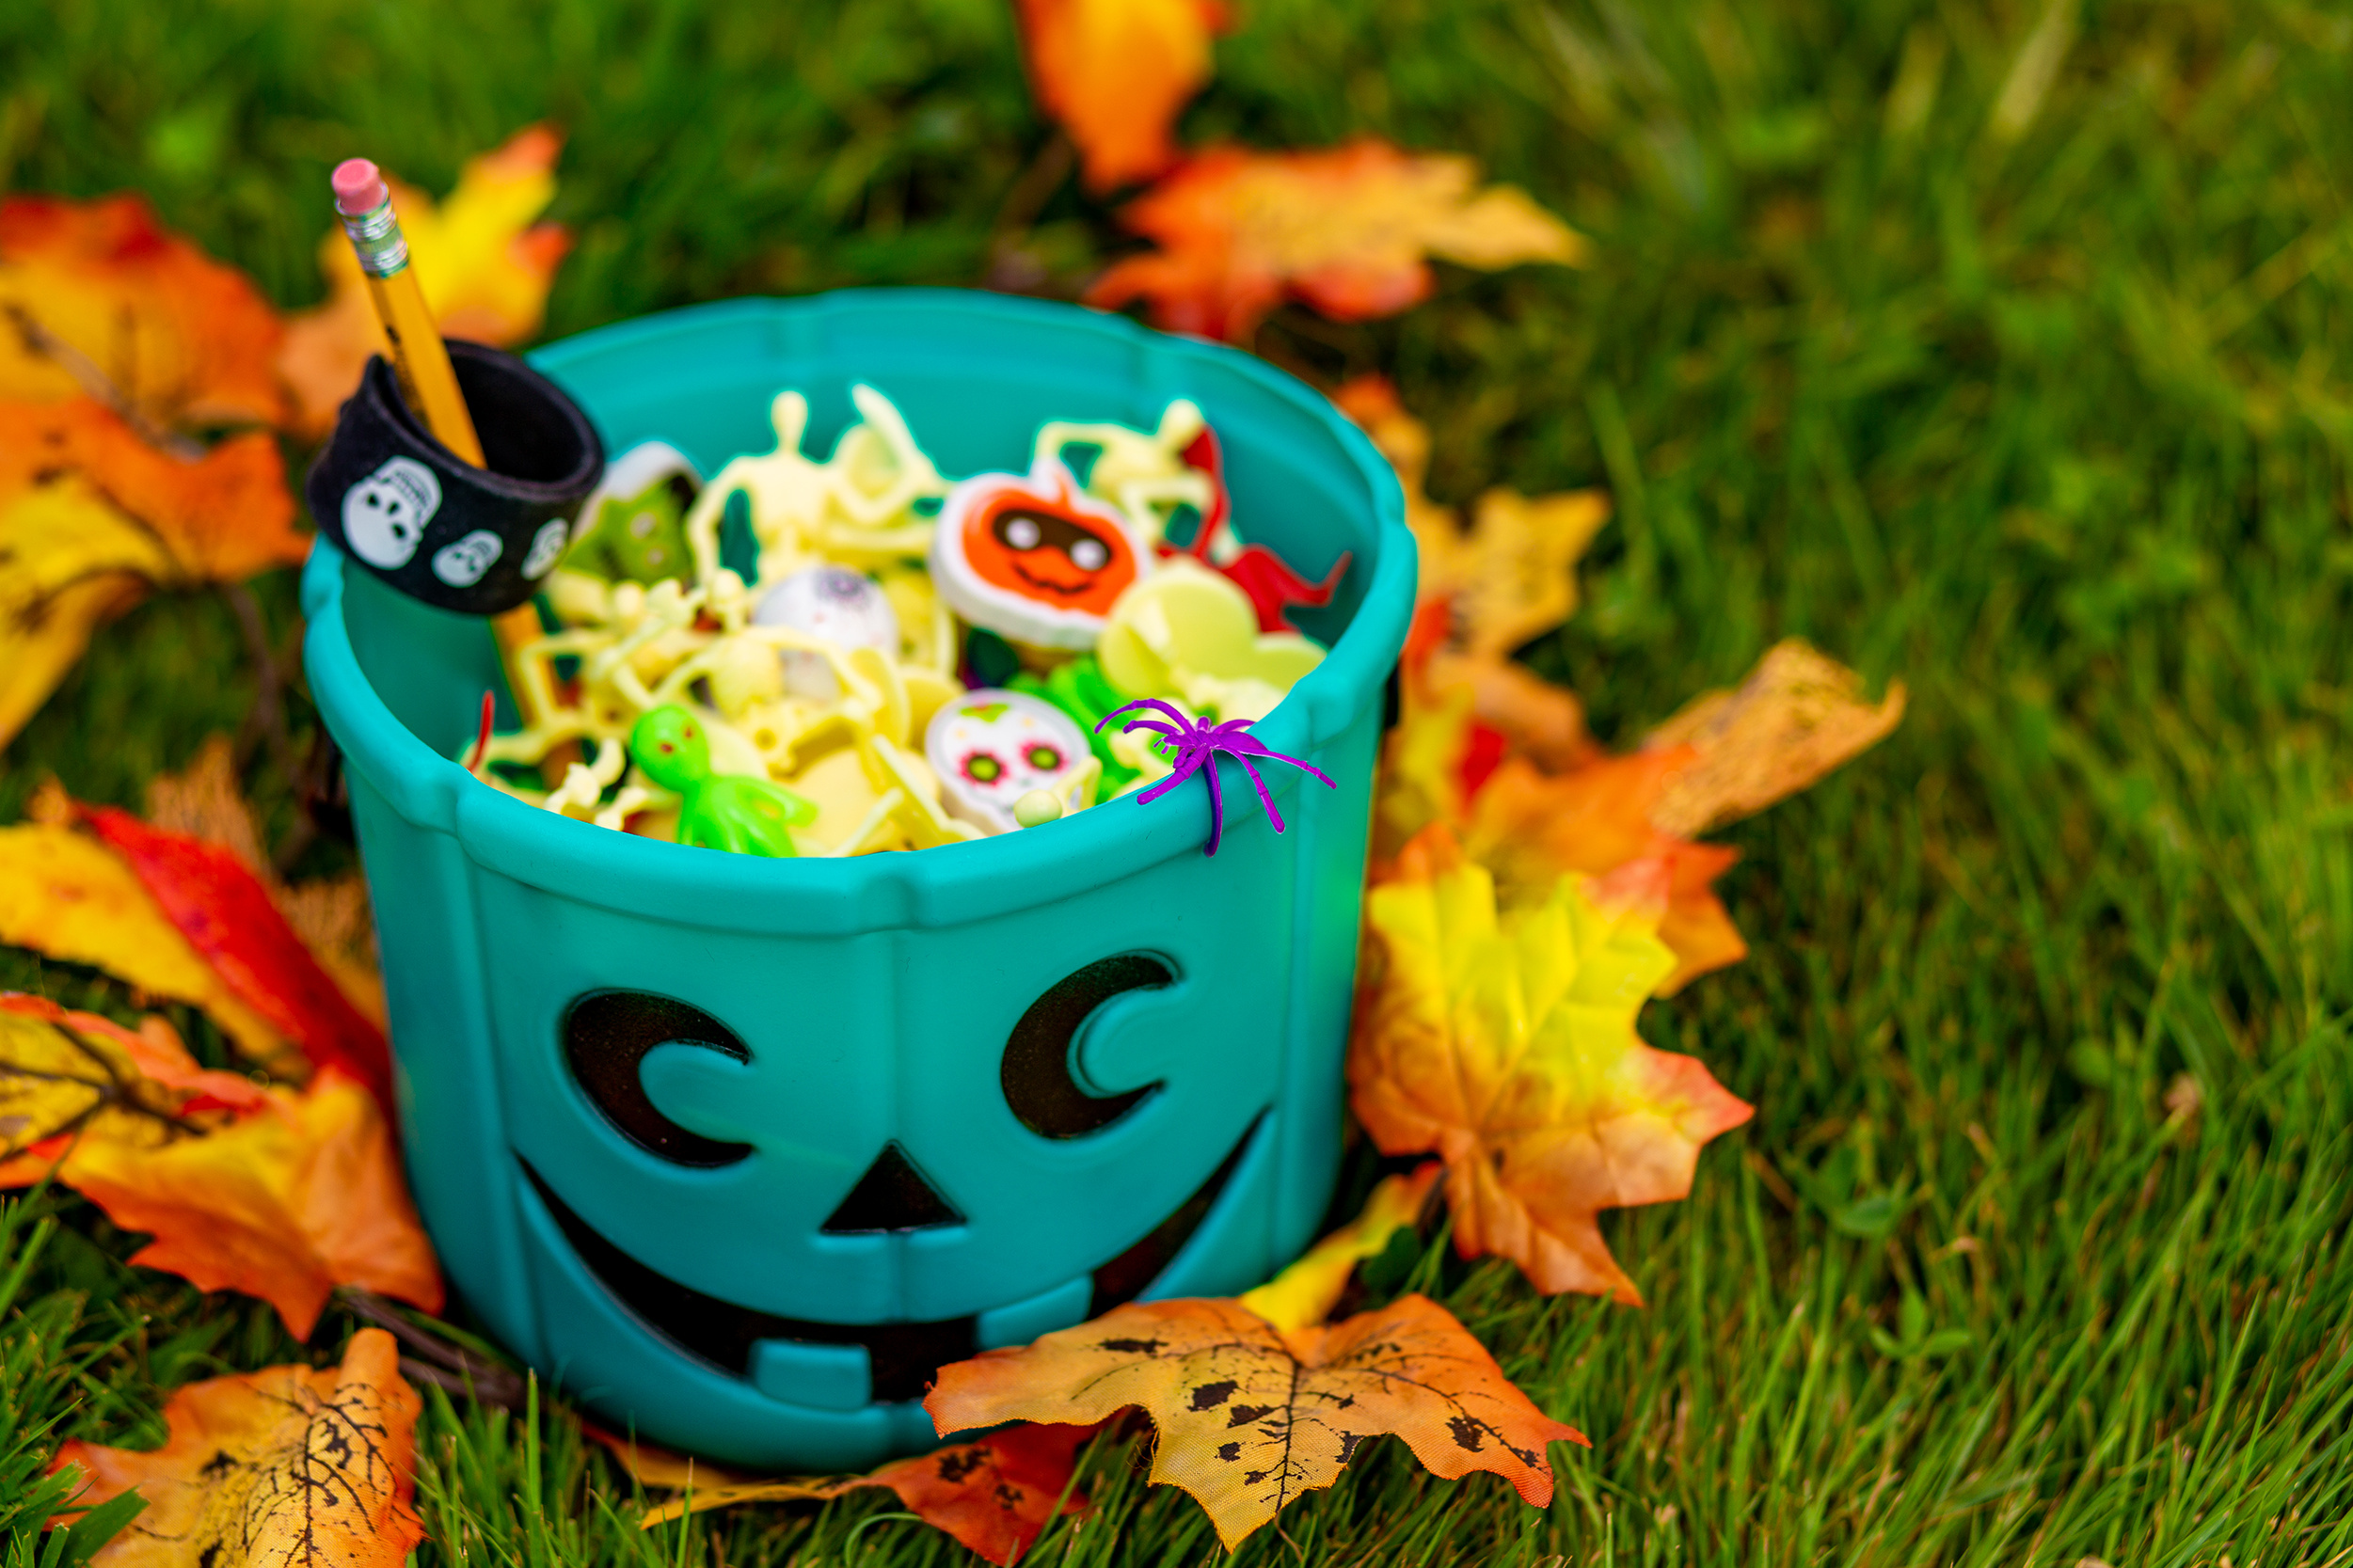 Halloween pumpkin basket filled with little toys